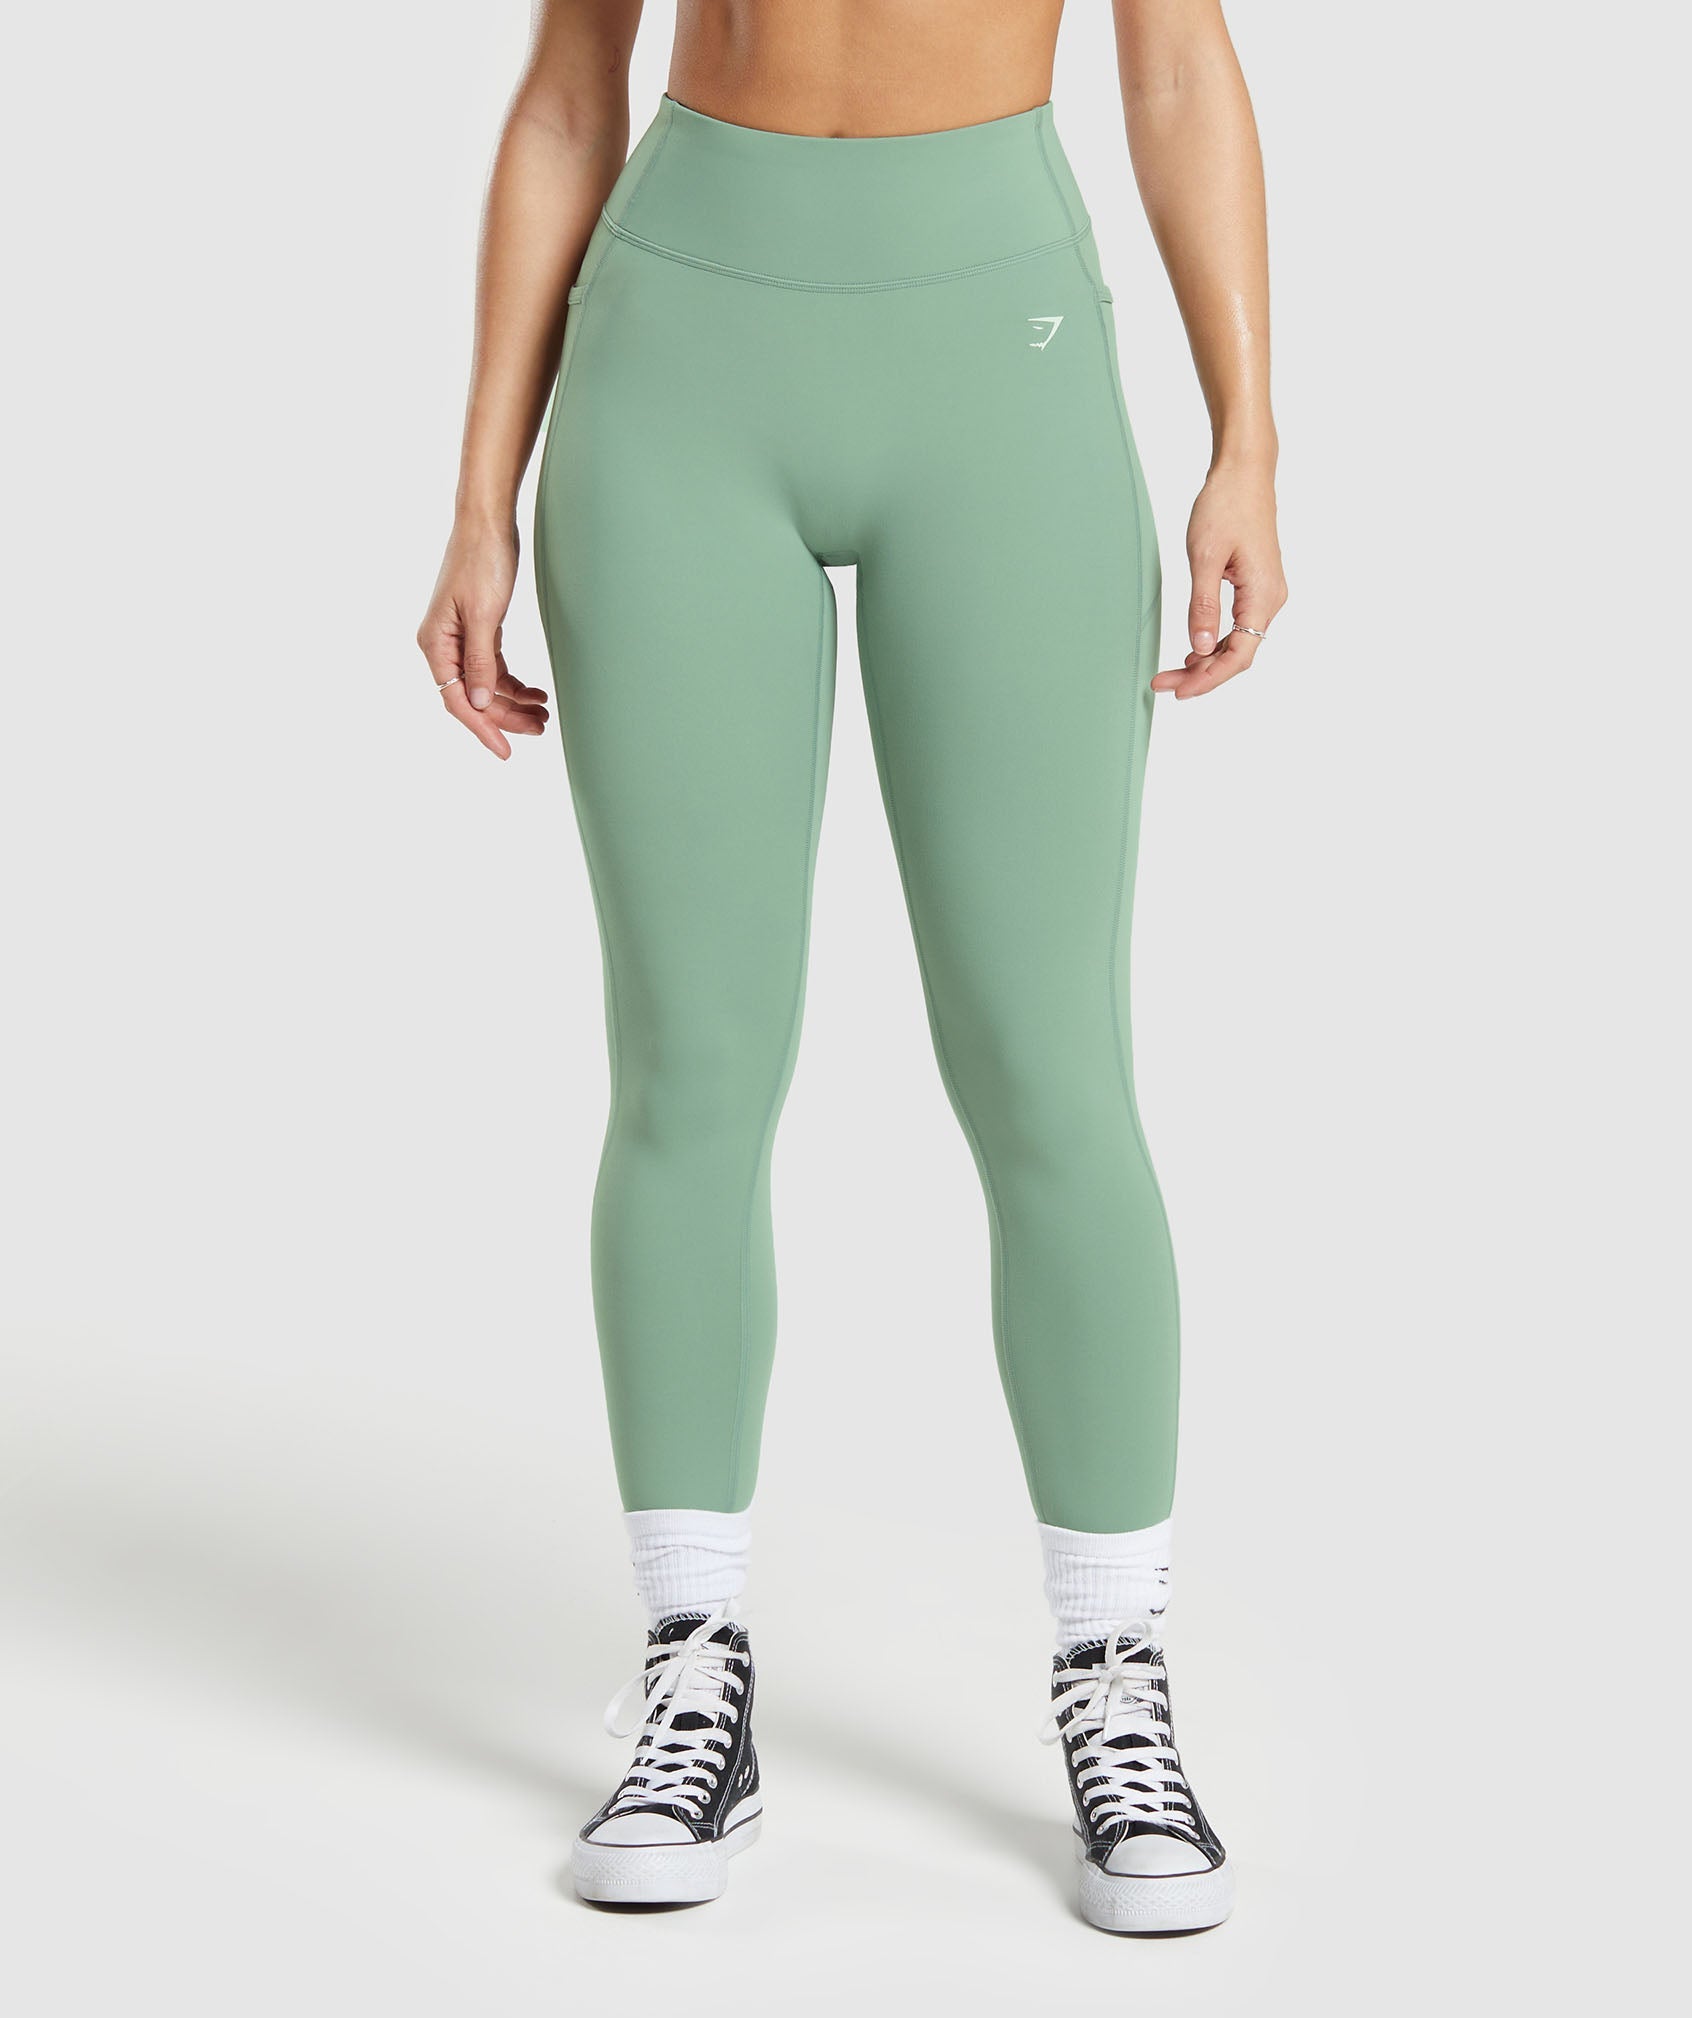 Fitness workout leggings with pockets - Torque aquamarine - Squat